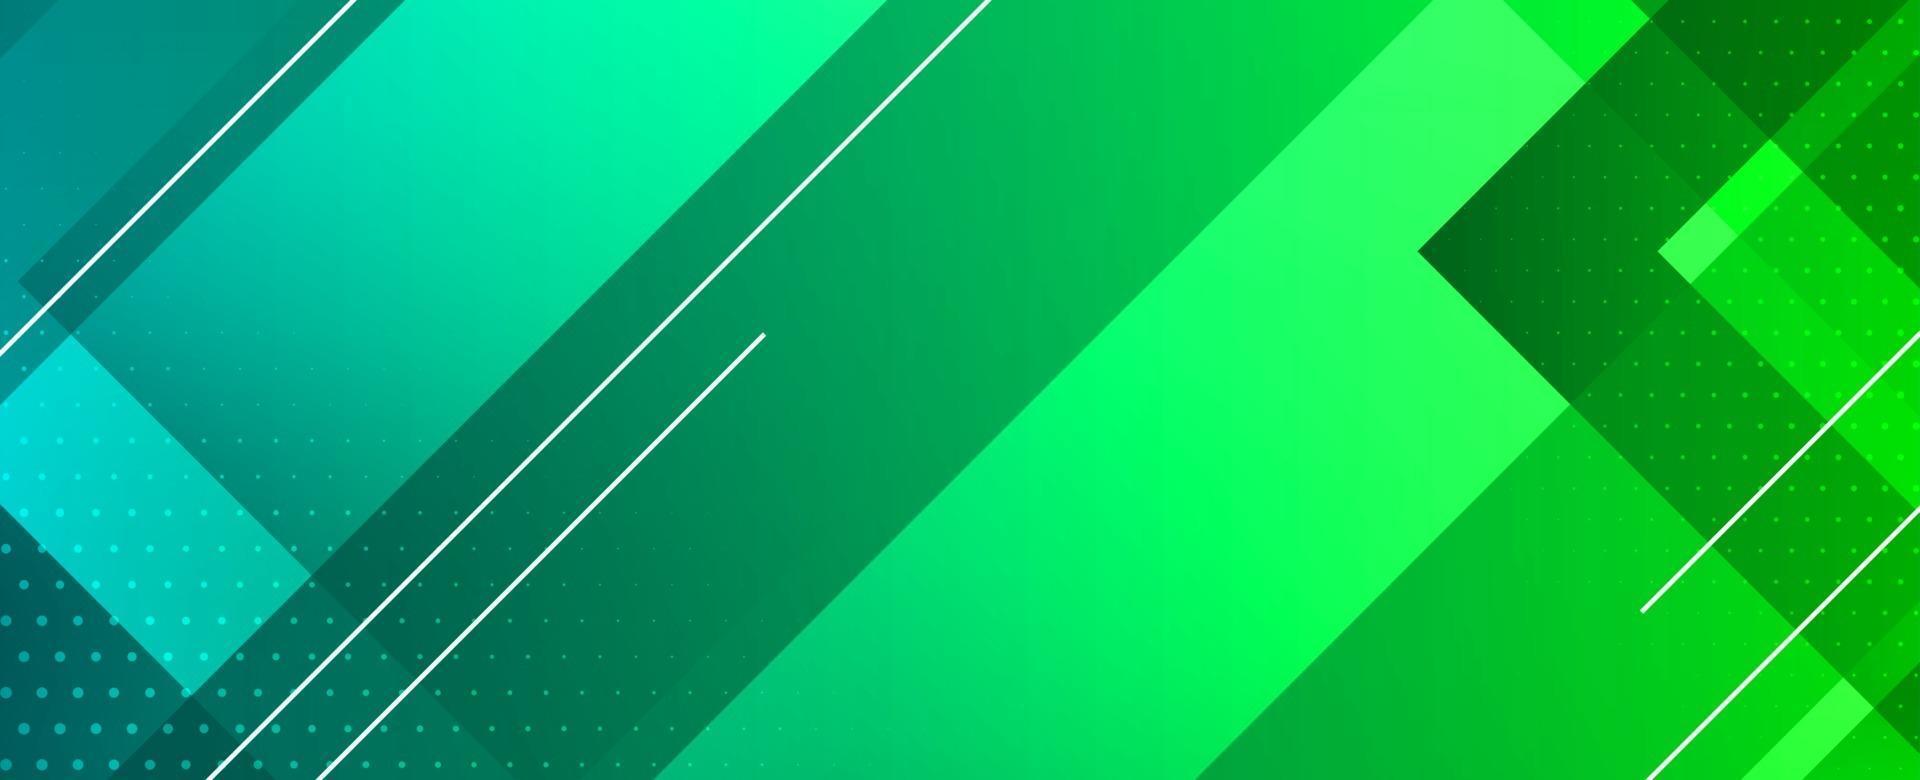 abstrakt geometrisk grön modern dekorativ snygg bannerbakgrund vektor